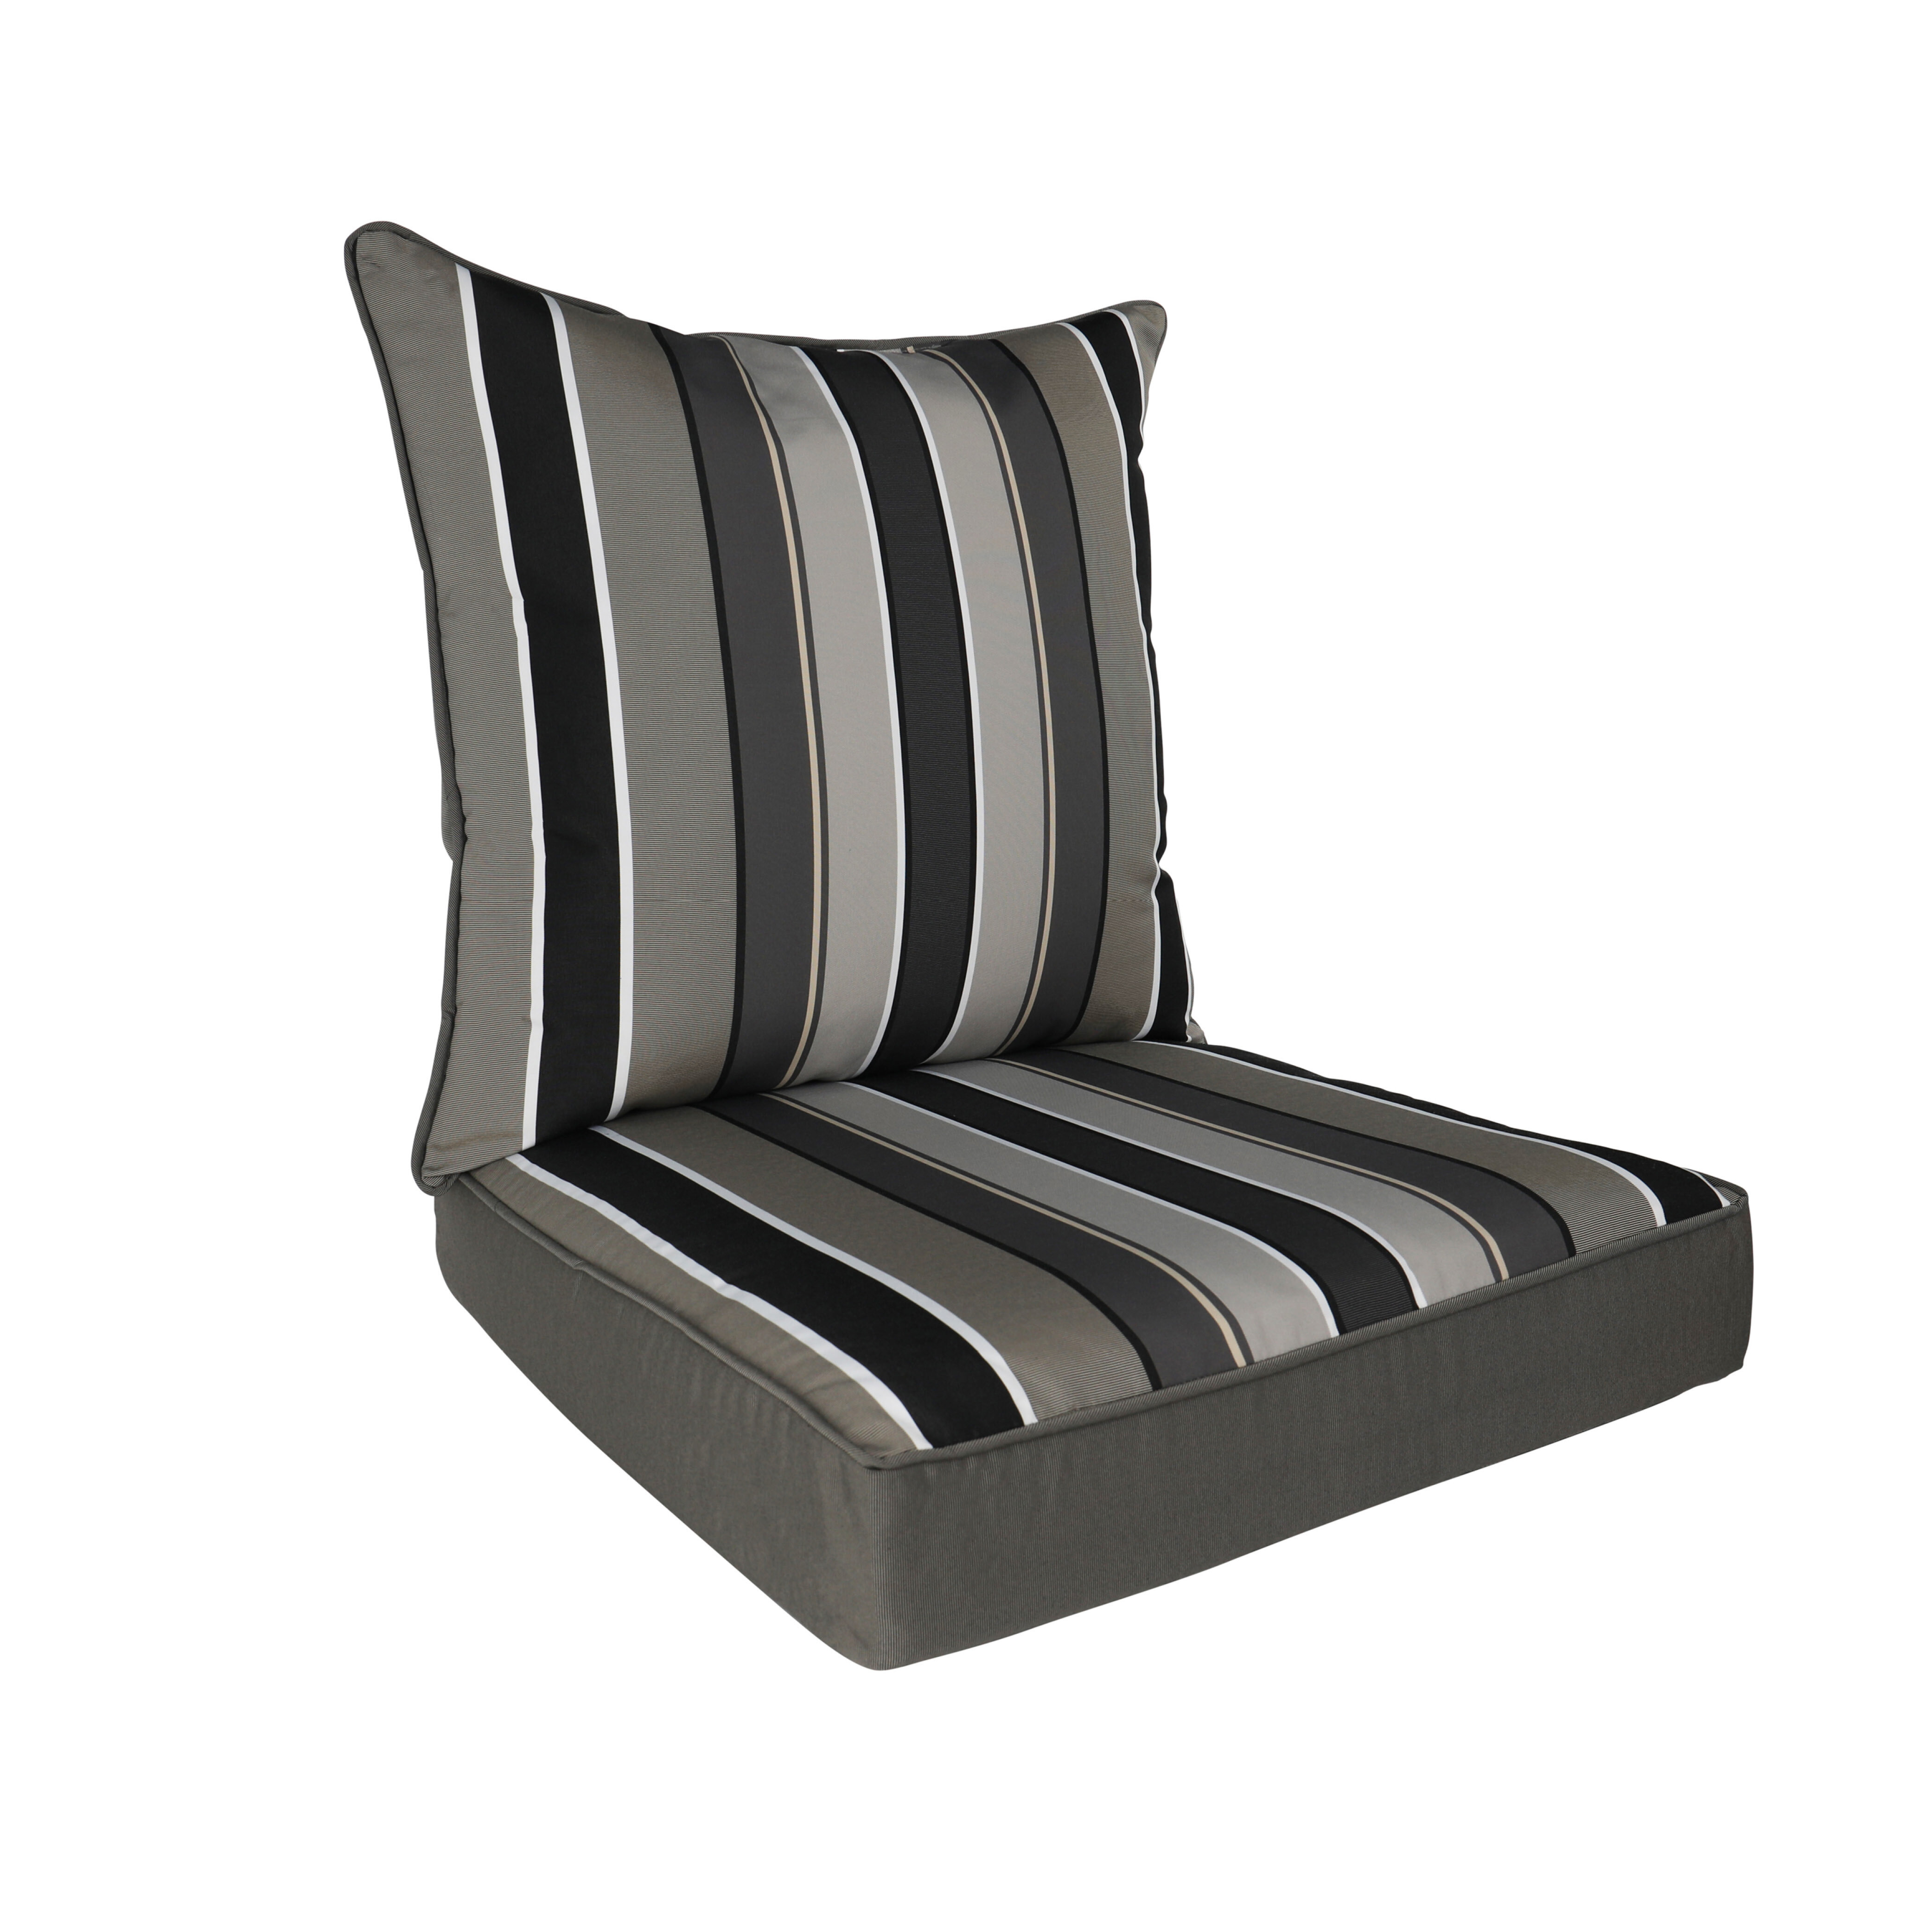 Rohando Stripe Outdoor/Indoor High Back Dining Chair Cushion for Patio Furniture, 21 x 43 x 3, Captain's Blue Latitude Run Fabric: Blue